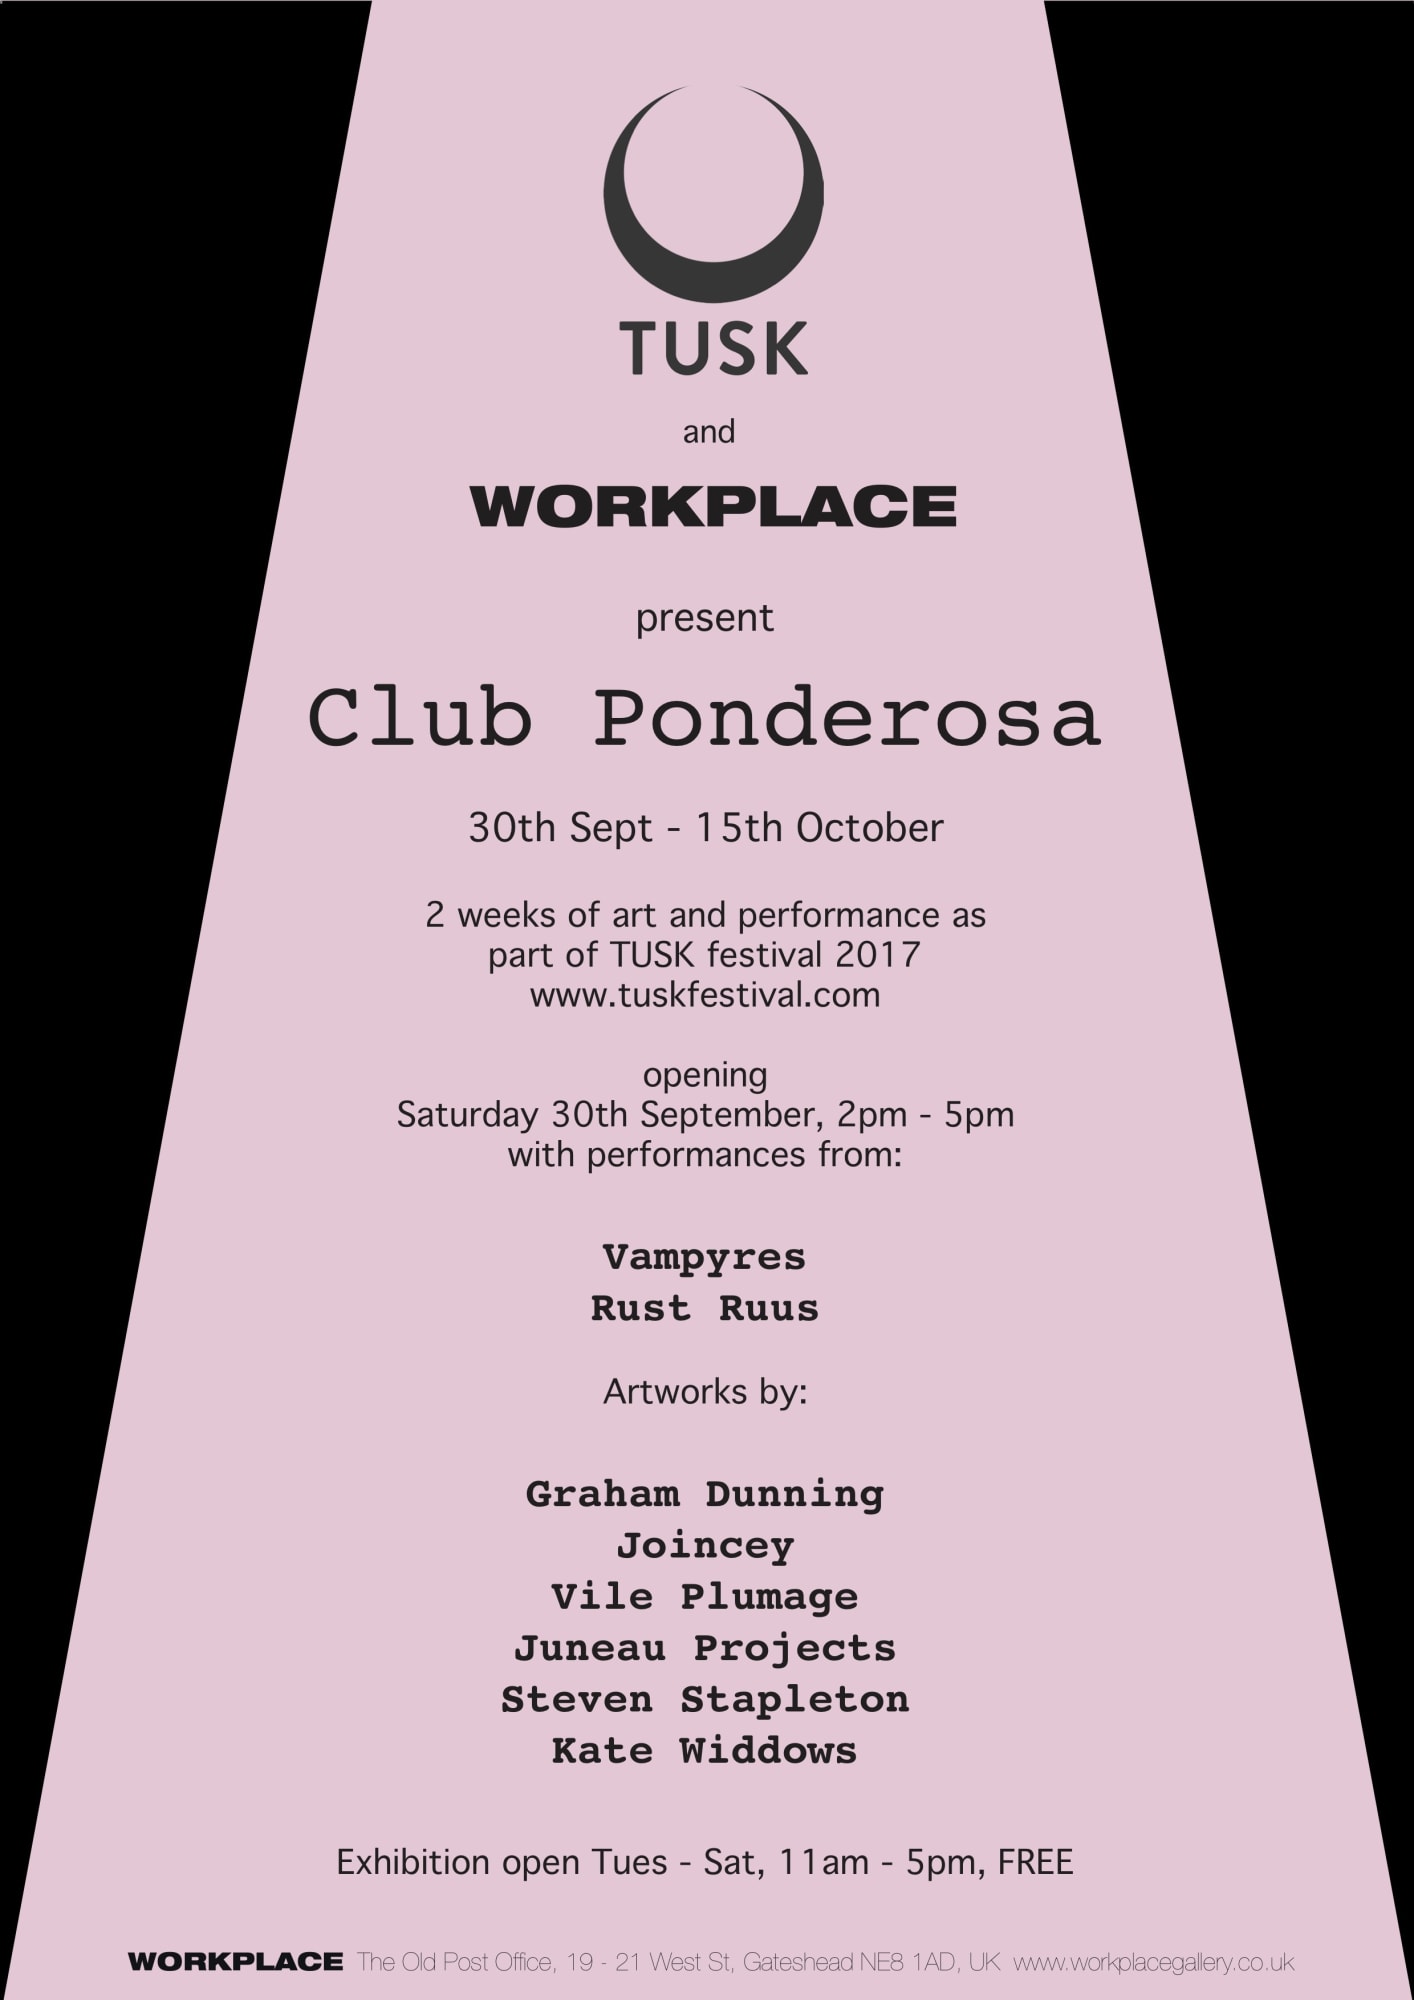 TUSK and WORKPLACE present CLUB PONDEROSA